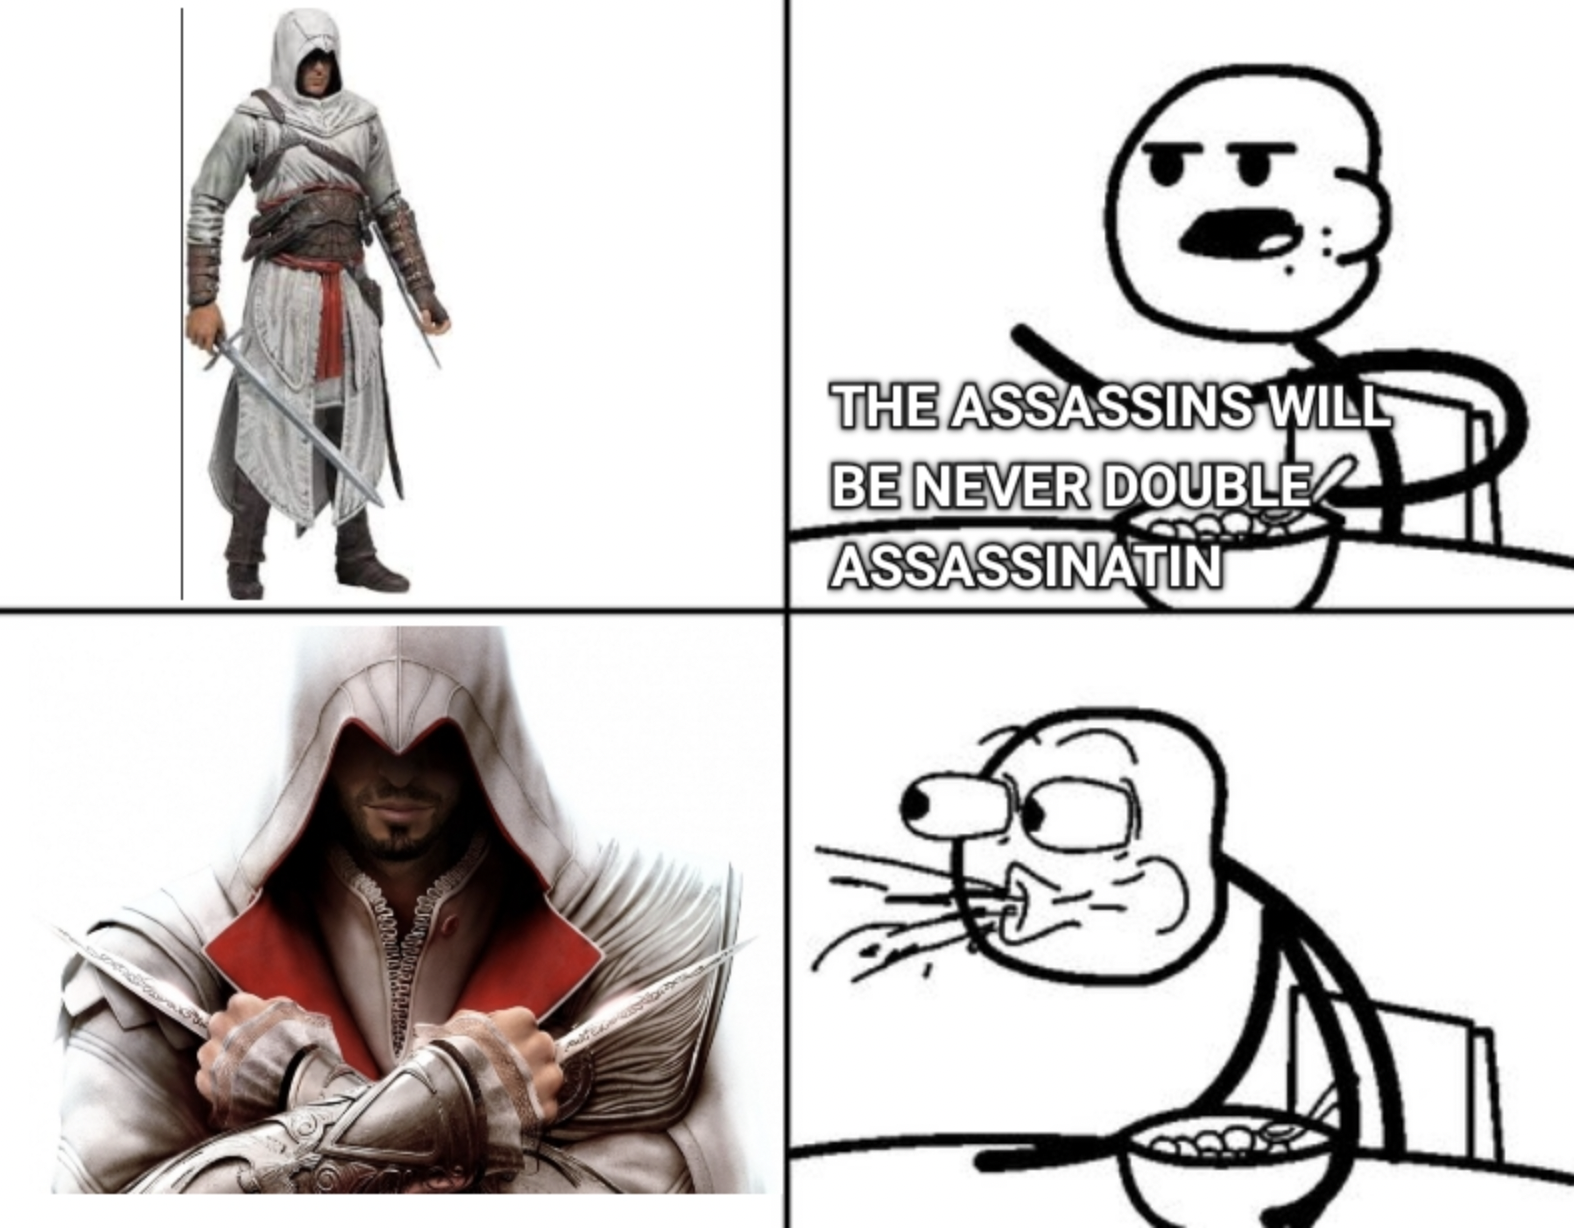 Assassin's Creed Memes - cartoon - The Assassins Will Be Never Double Assassinatin